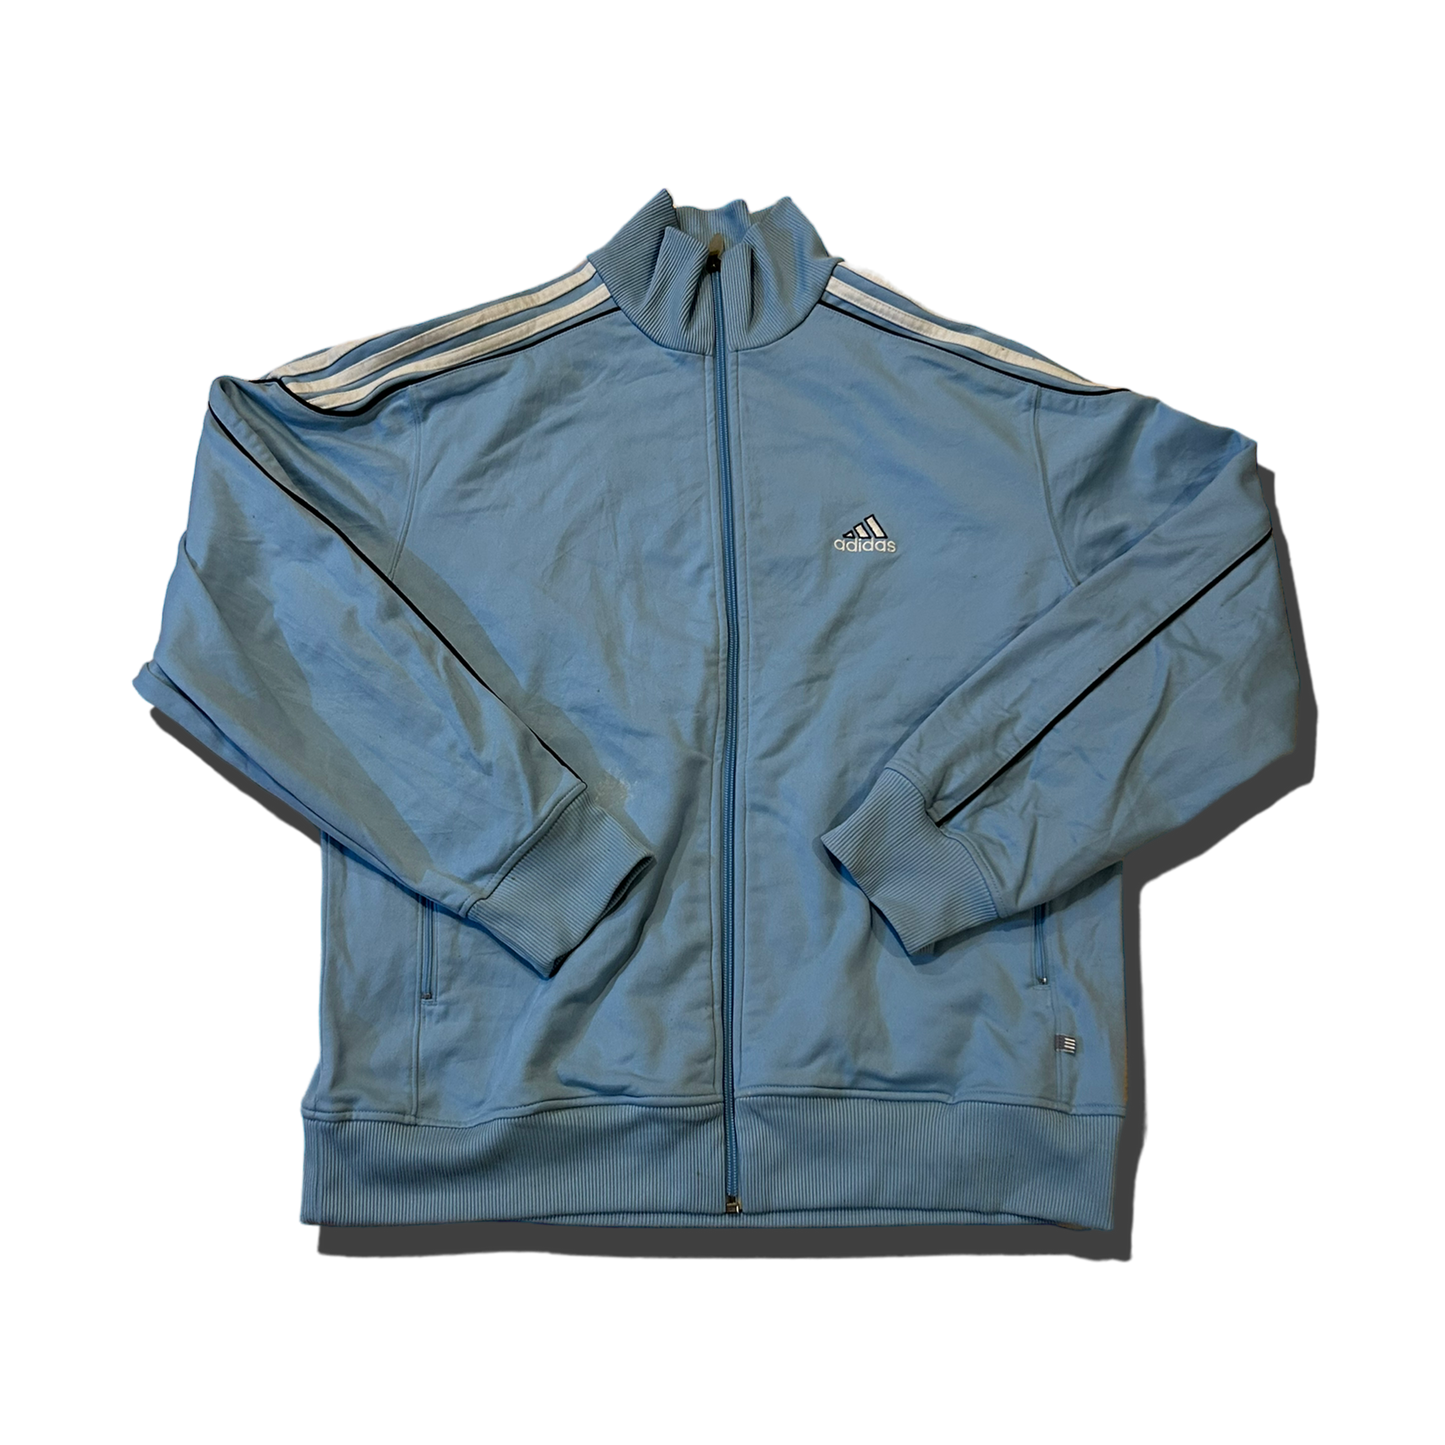 Retro Adidas Jacket